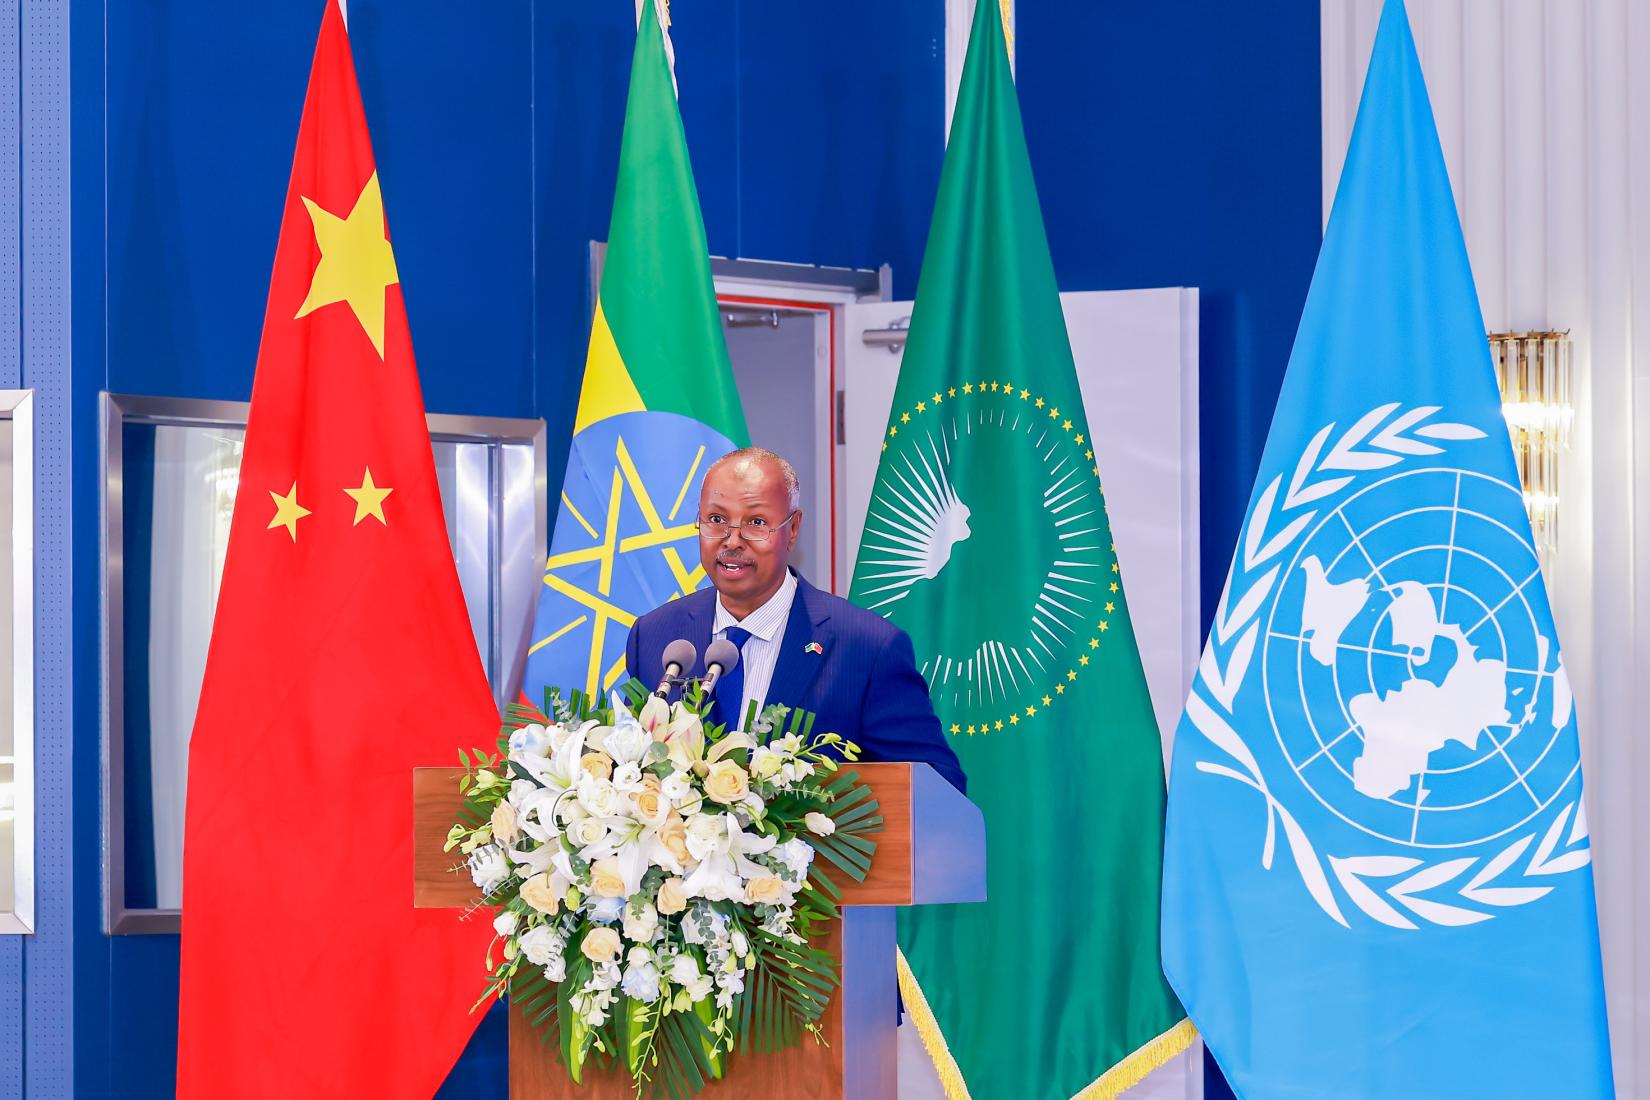 H.E. Mr. Abdallah Abdillahi Miguil, Ambassador of the Republic of Djibouti, Dean of the Horn of Africa Ambassadors Group 